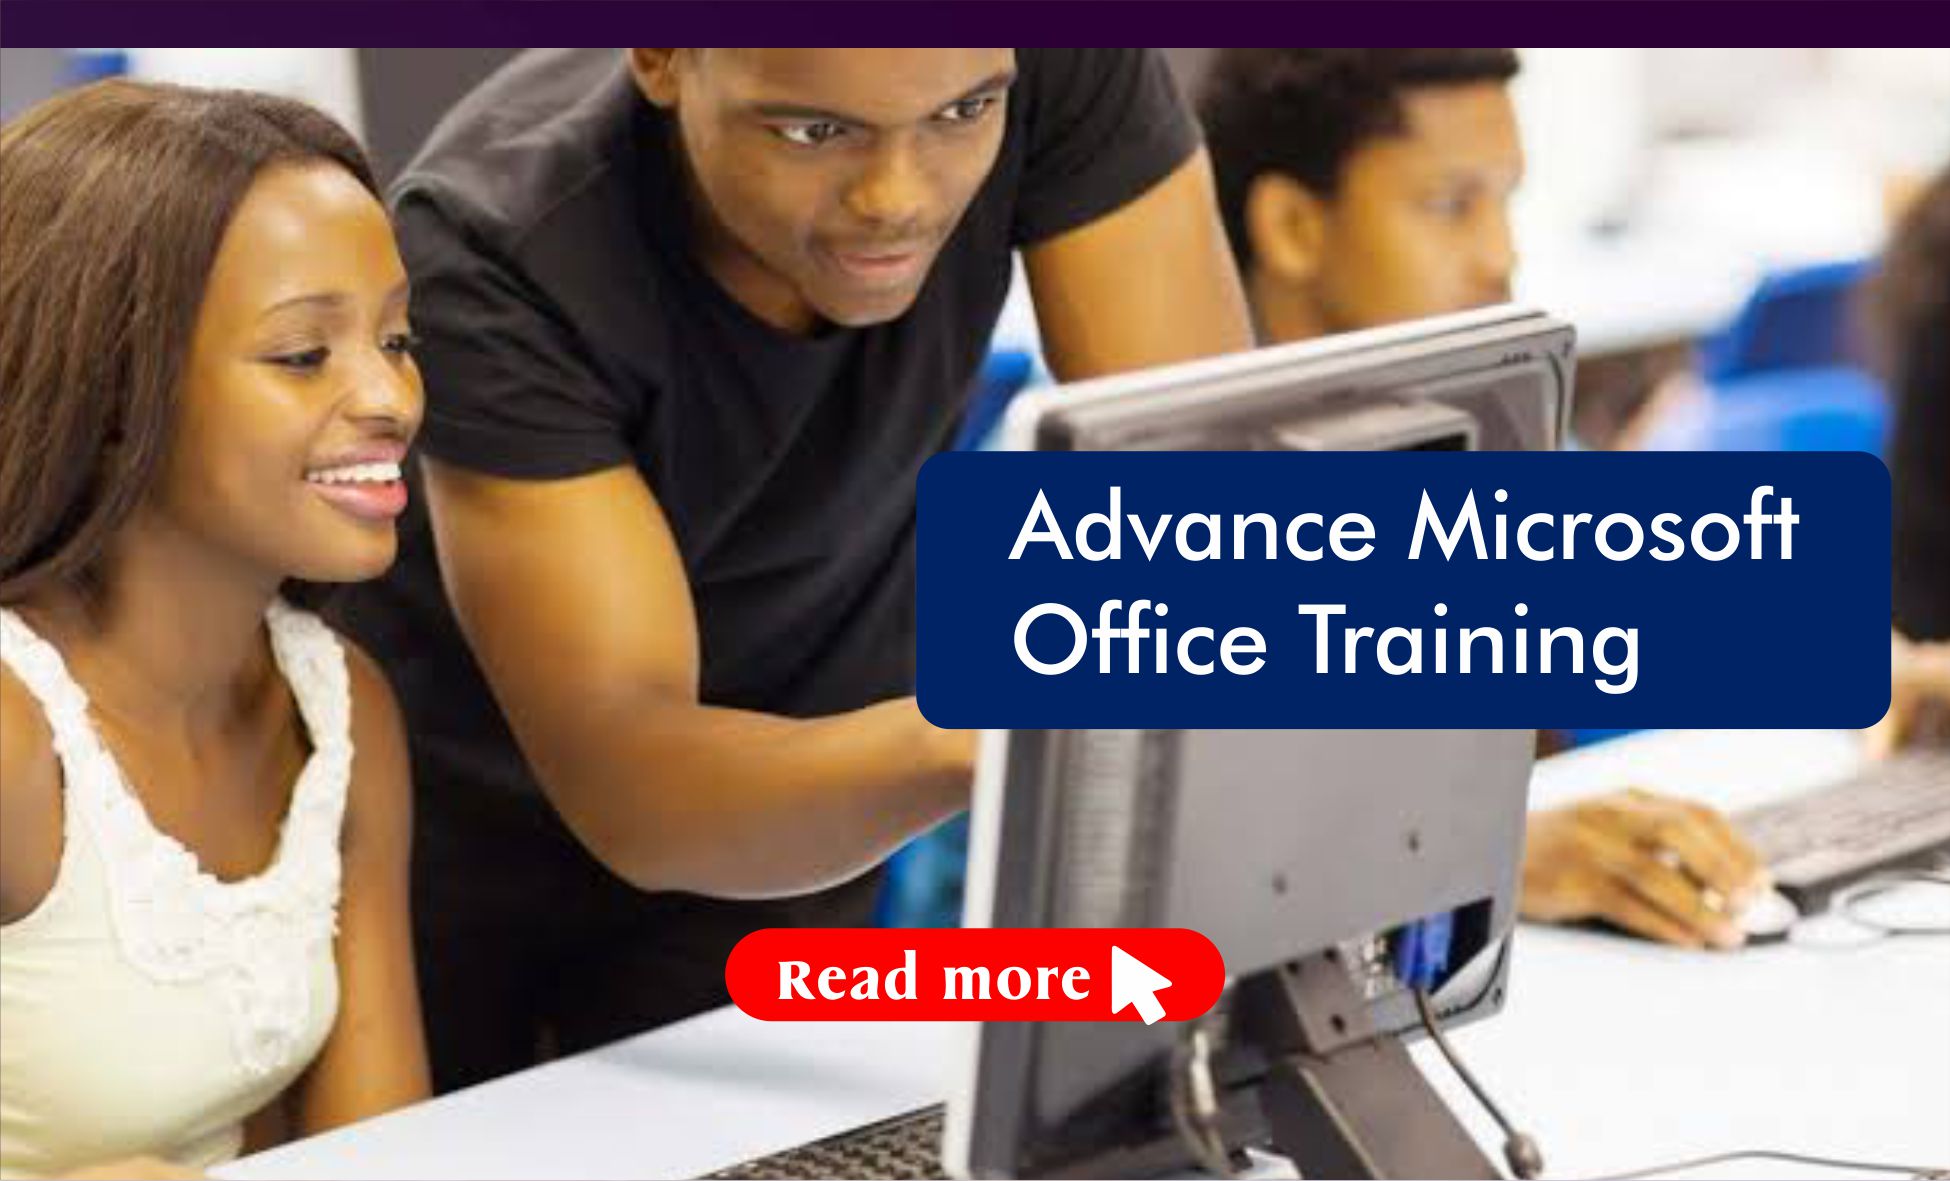 advance microsoft office training - stamsgroup.com